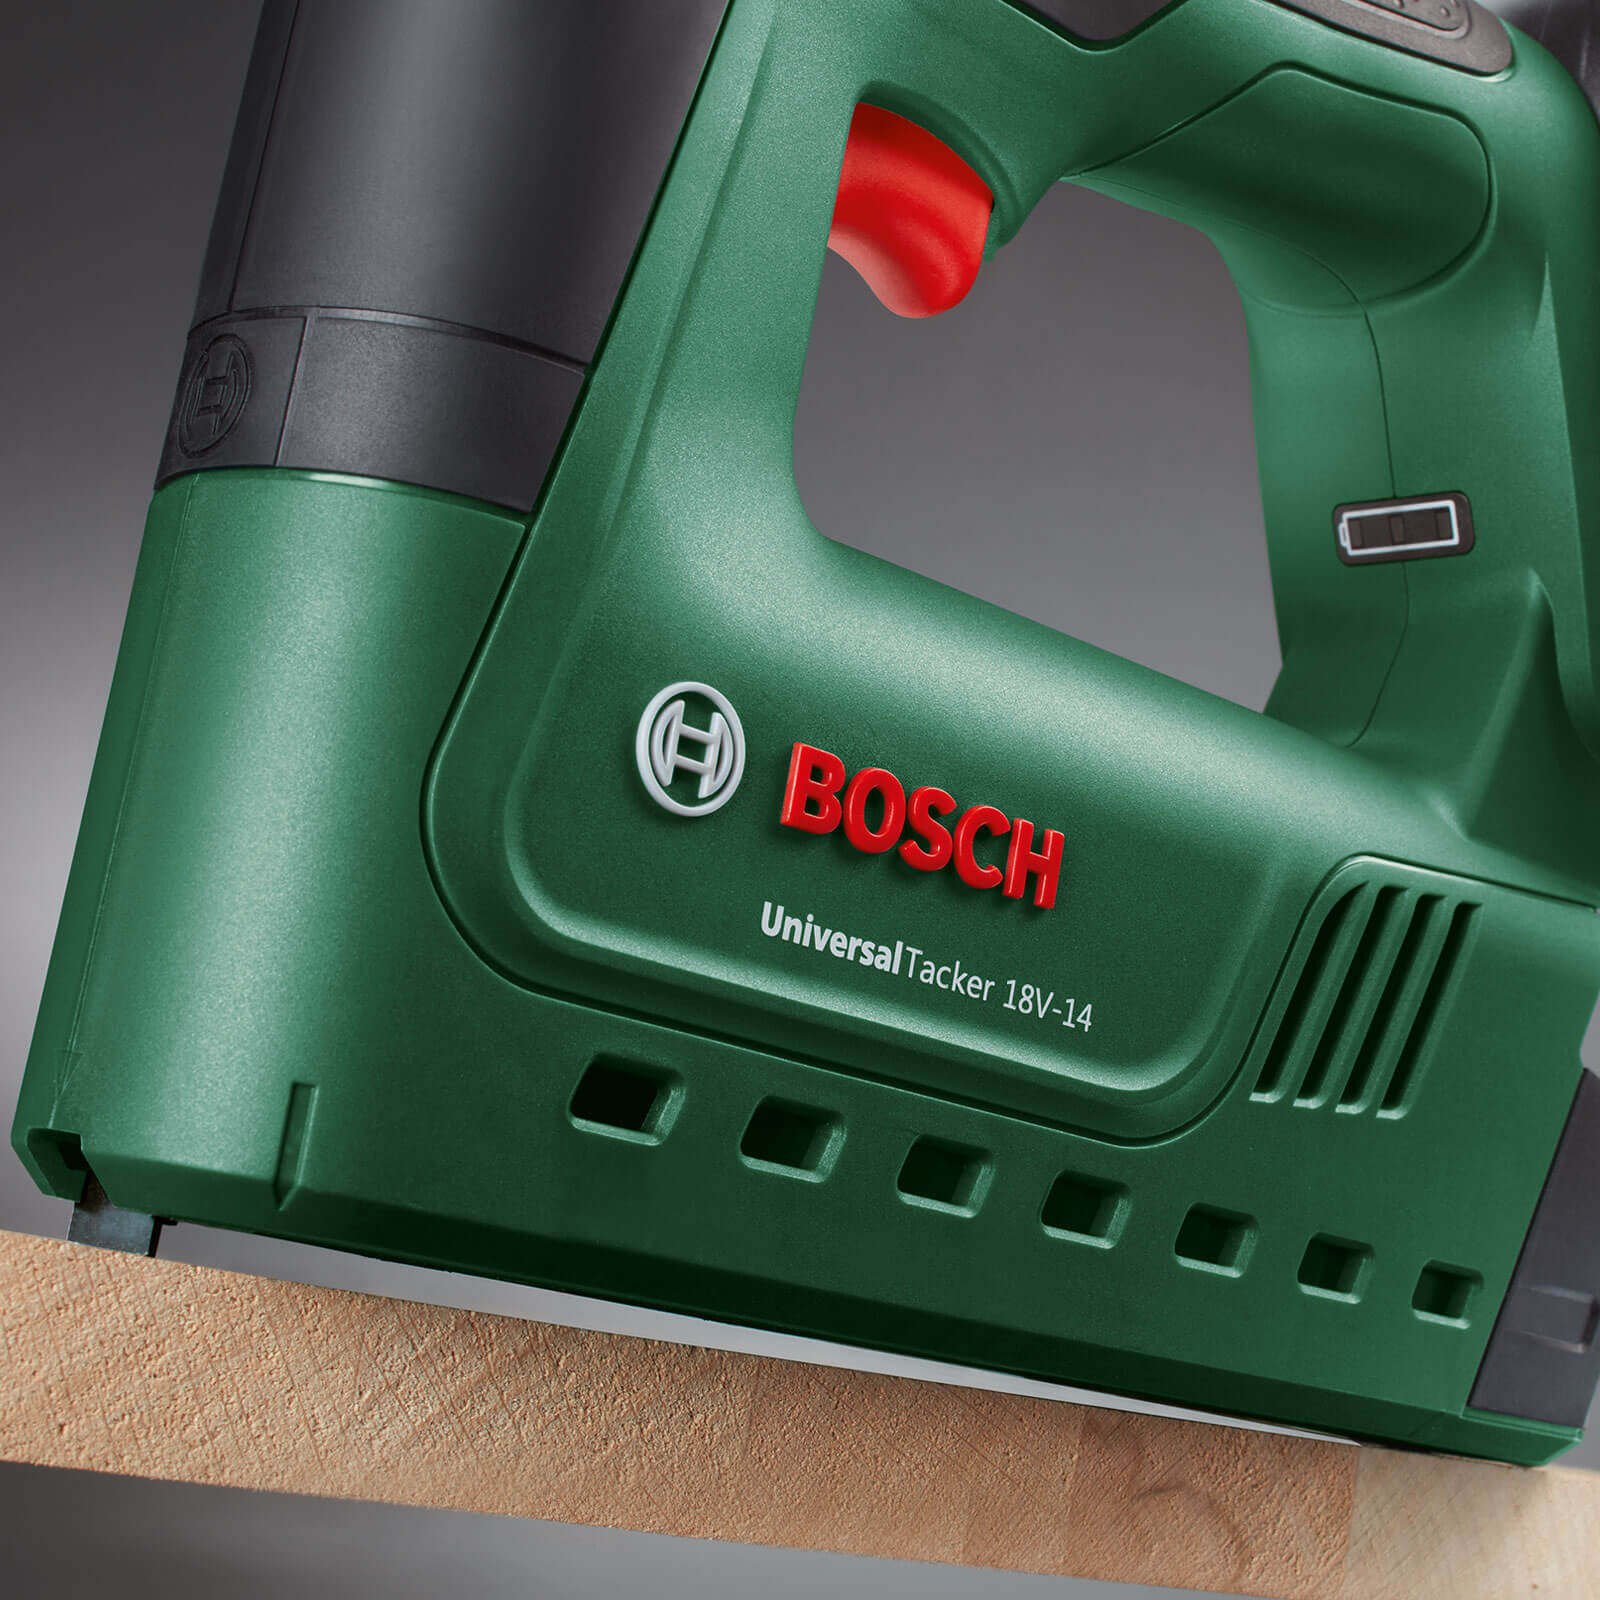 Bosch – Nailing ergonomic innovation - Journal - TEAMS